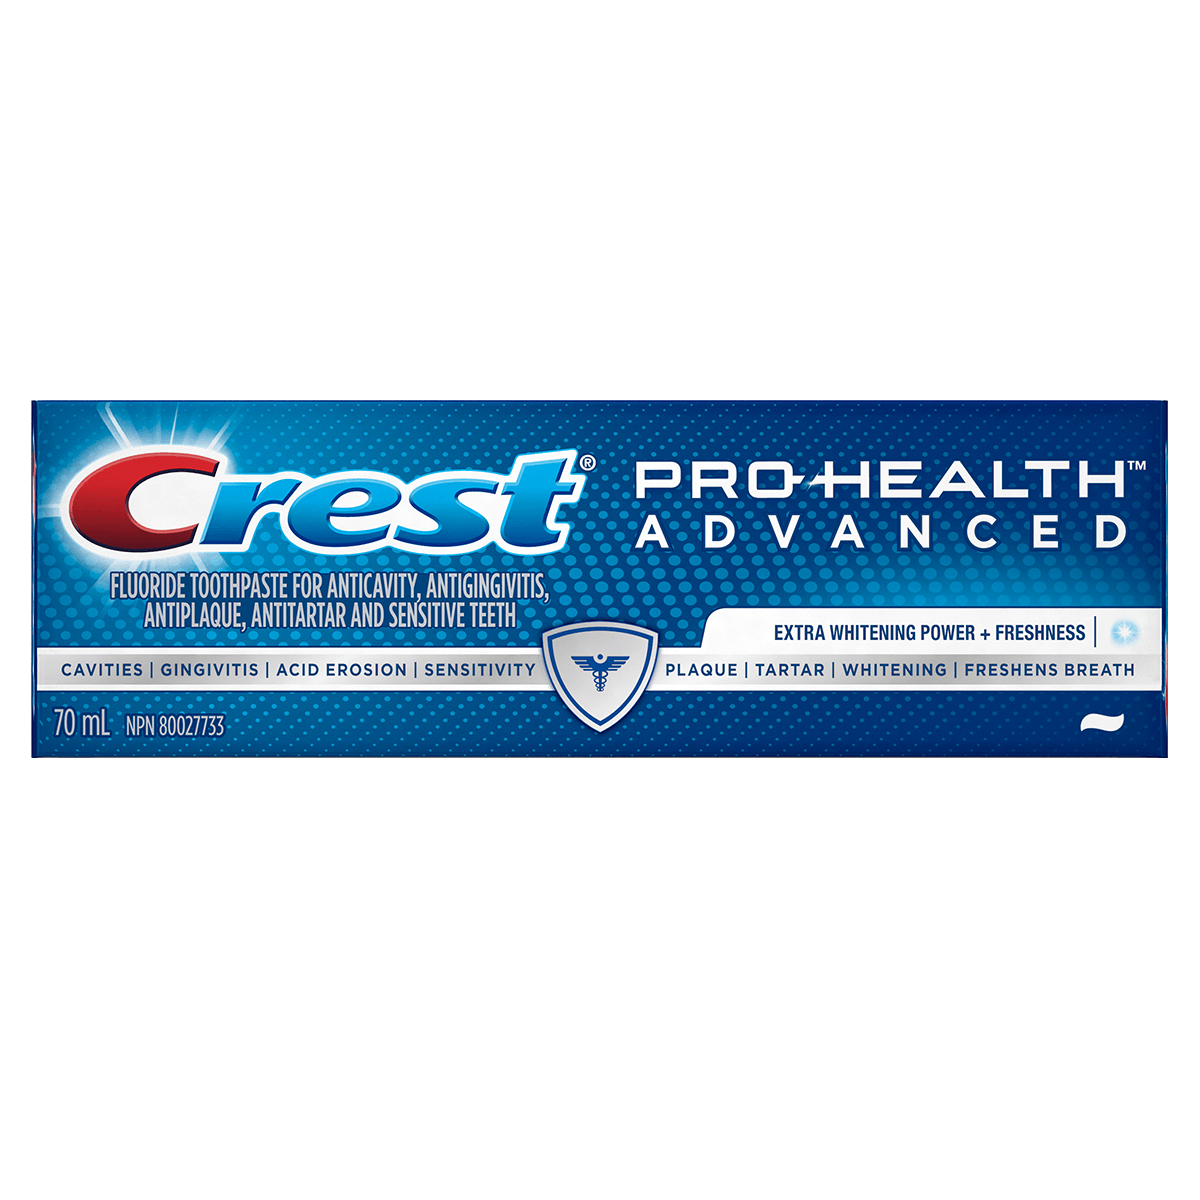 54.2crest-pro-health-advanced-extra-whitening-power-freshness-toothpaste-1200x1200